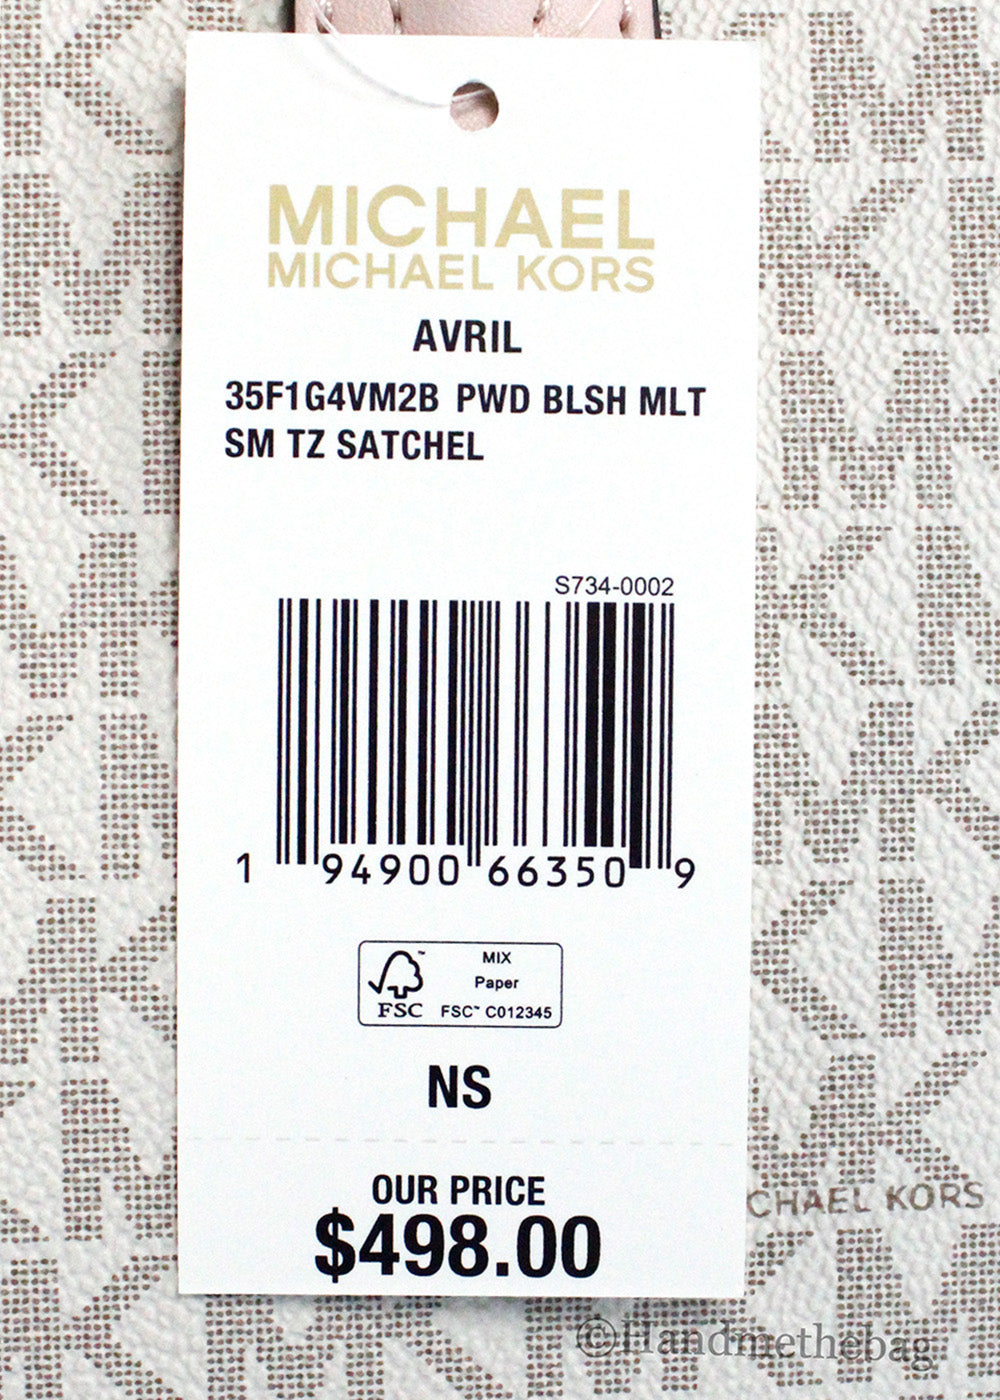 Michael Kors Avril Small Powder Blush PVC TZ Satchel